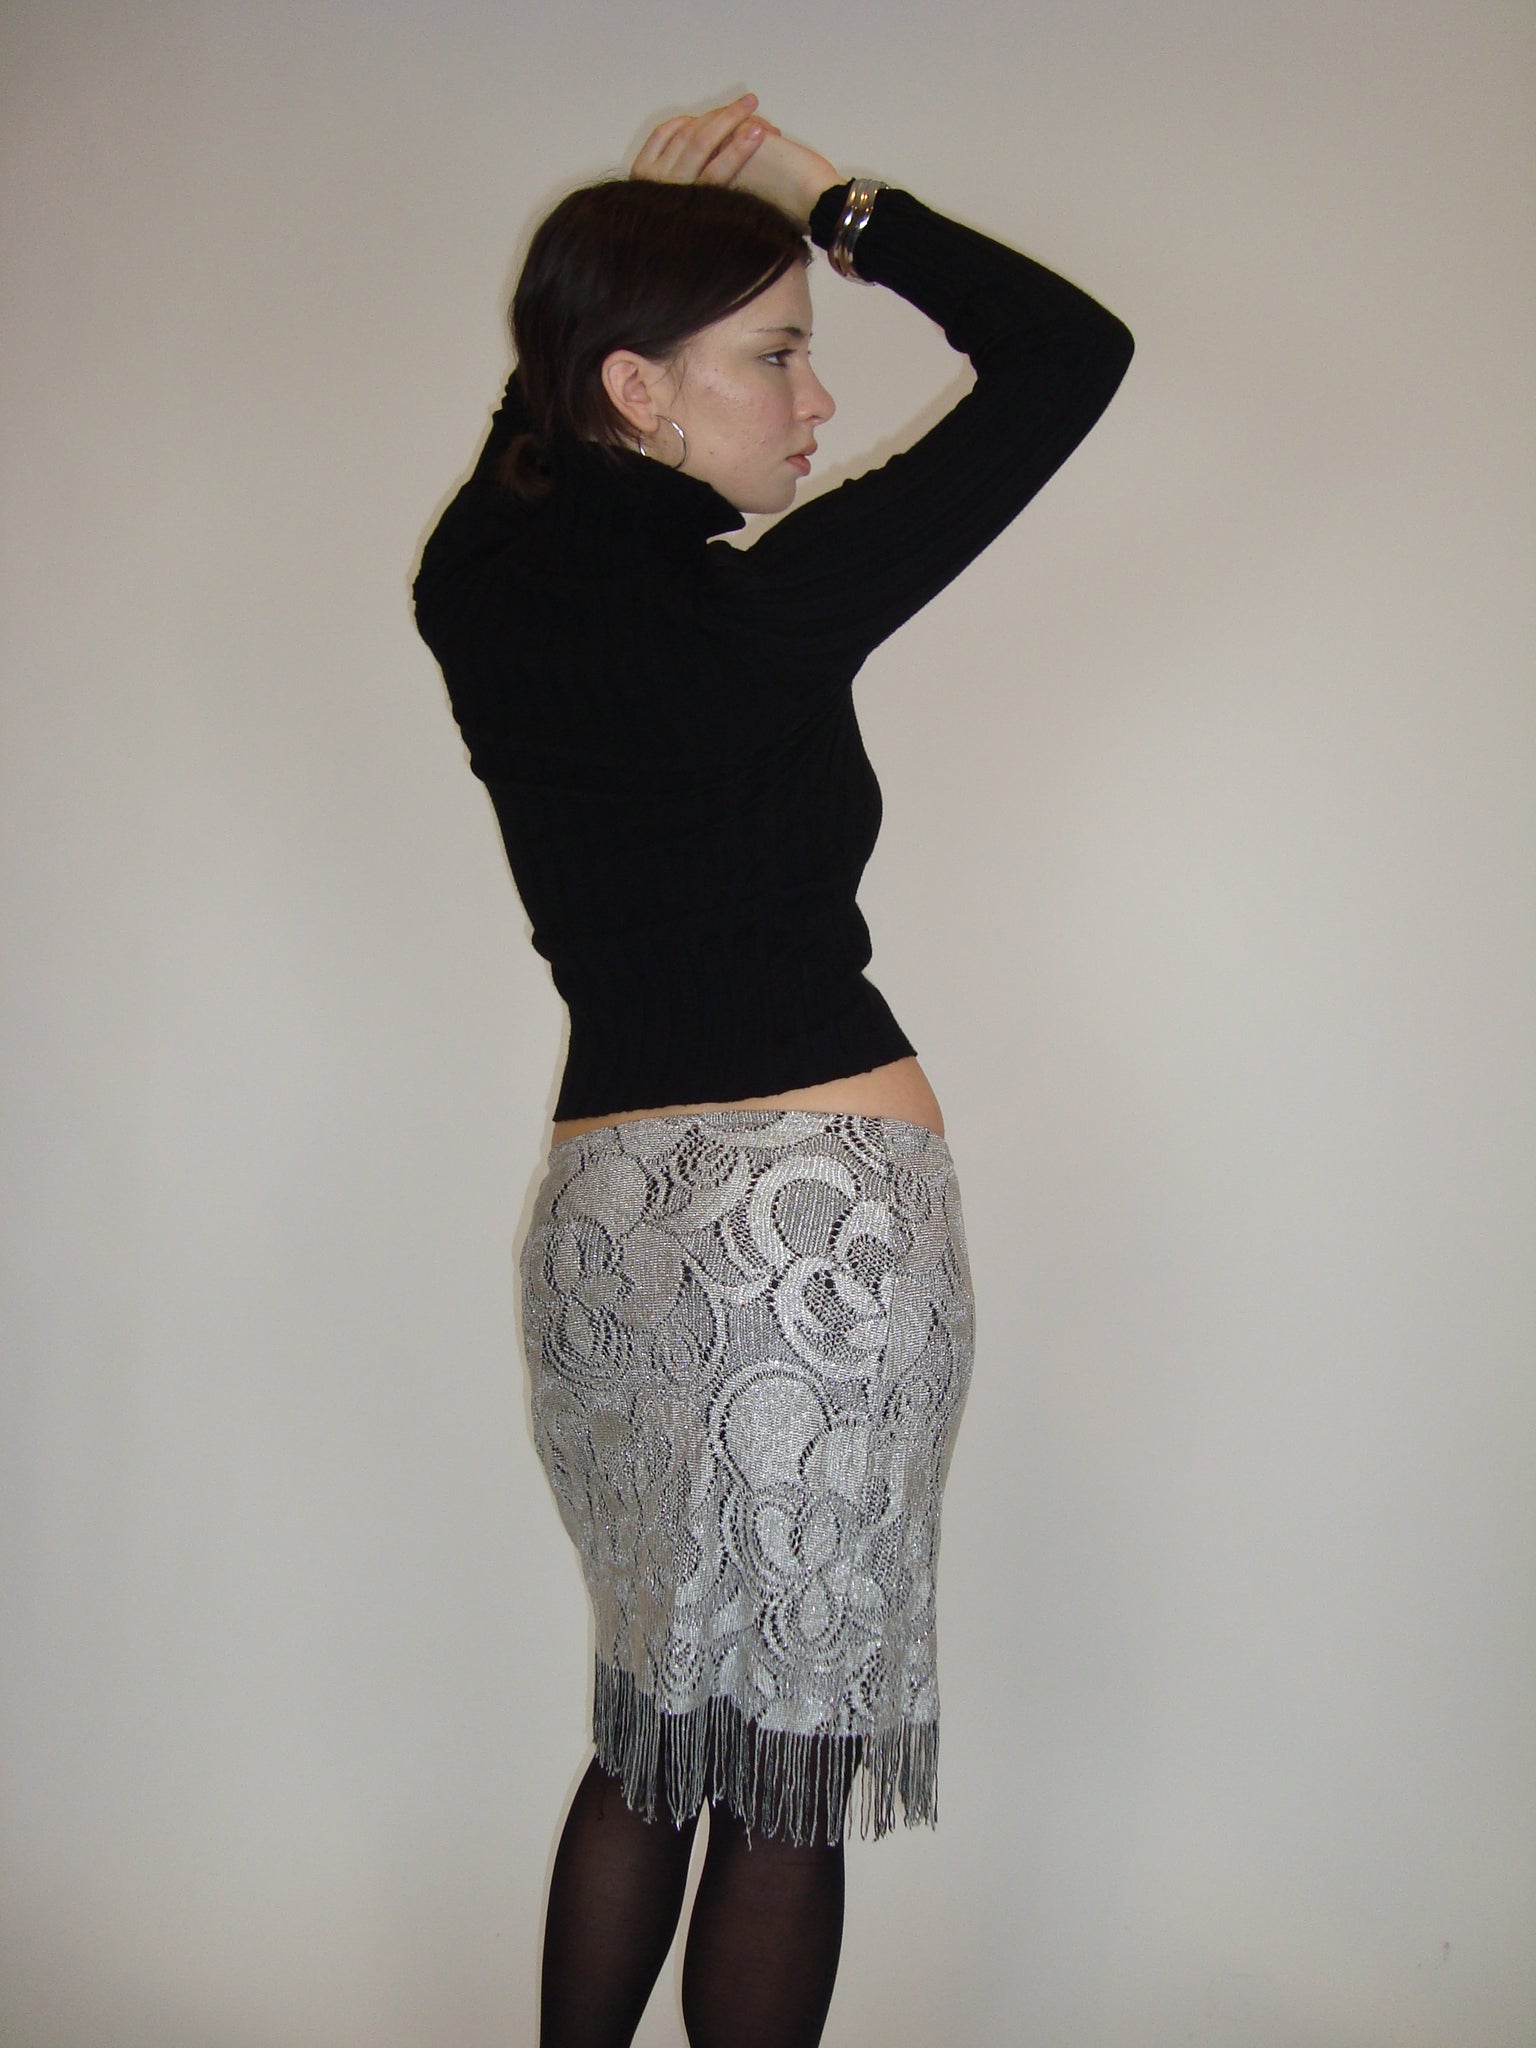 Silver Metallic Floral Print Knit Skirt